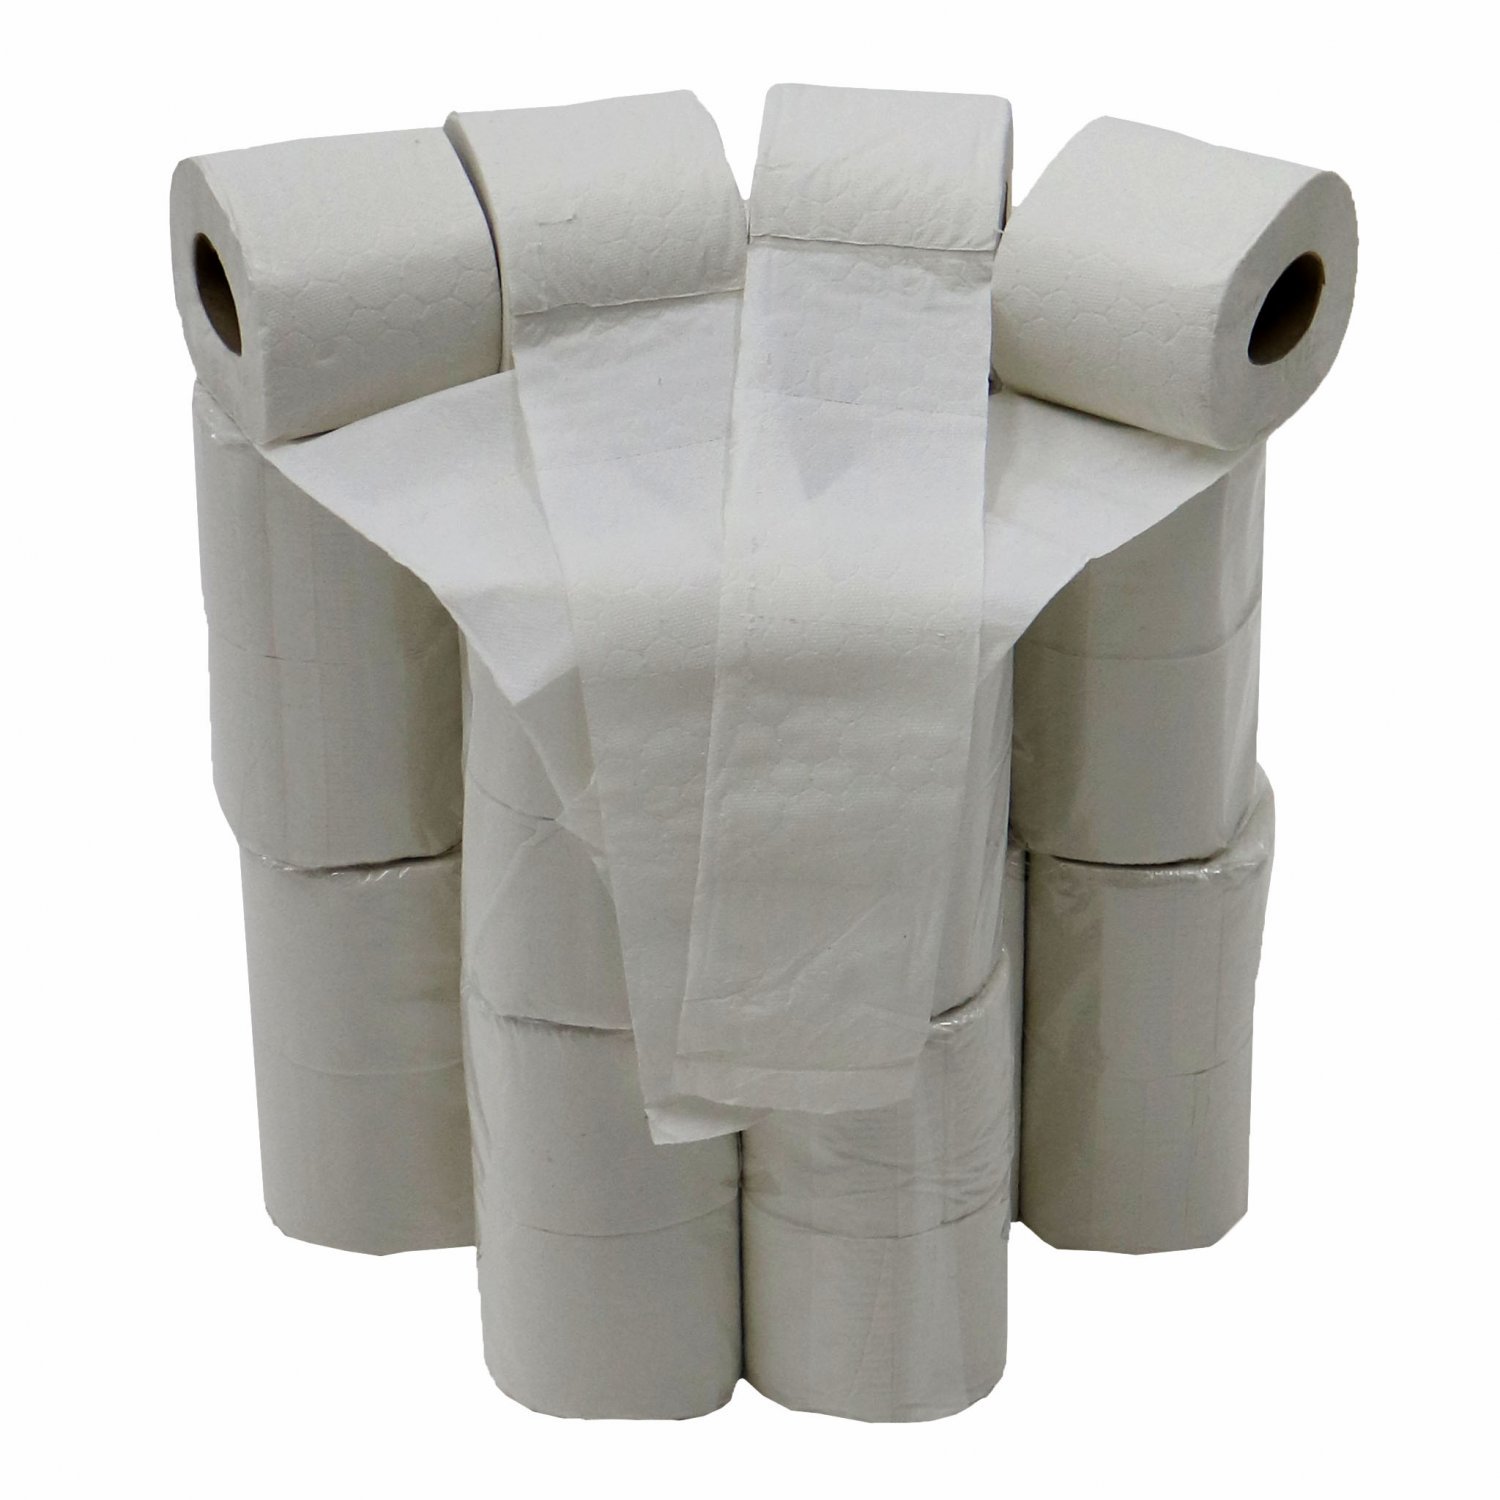 36x Rolls 2-Ply 320 Sheet Toilet Roll Tissue Bathroom Paper